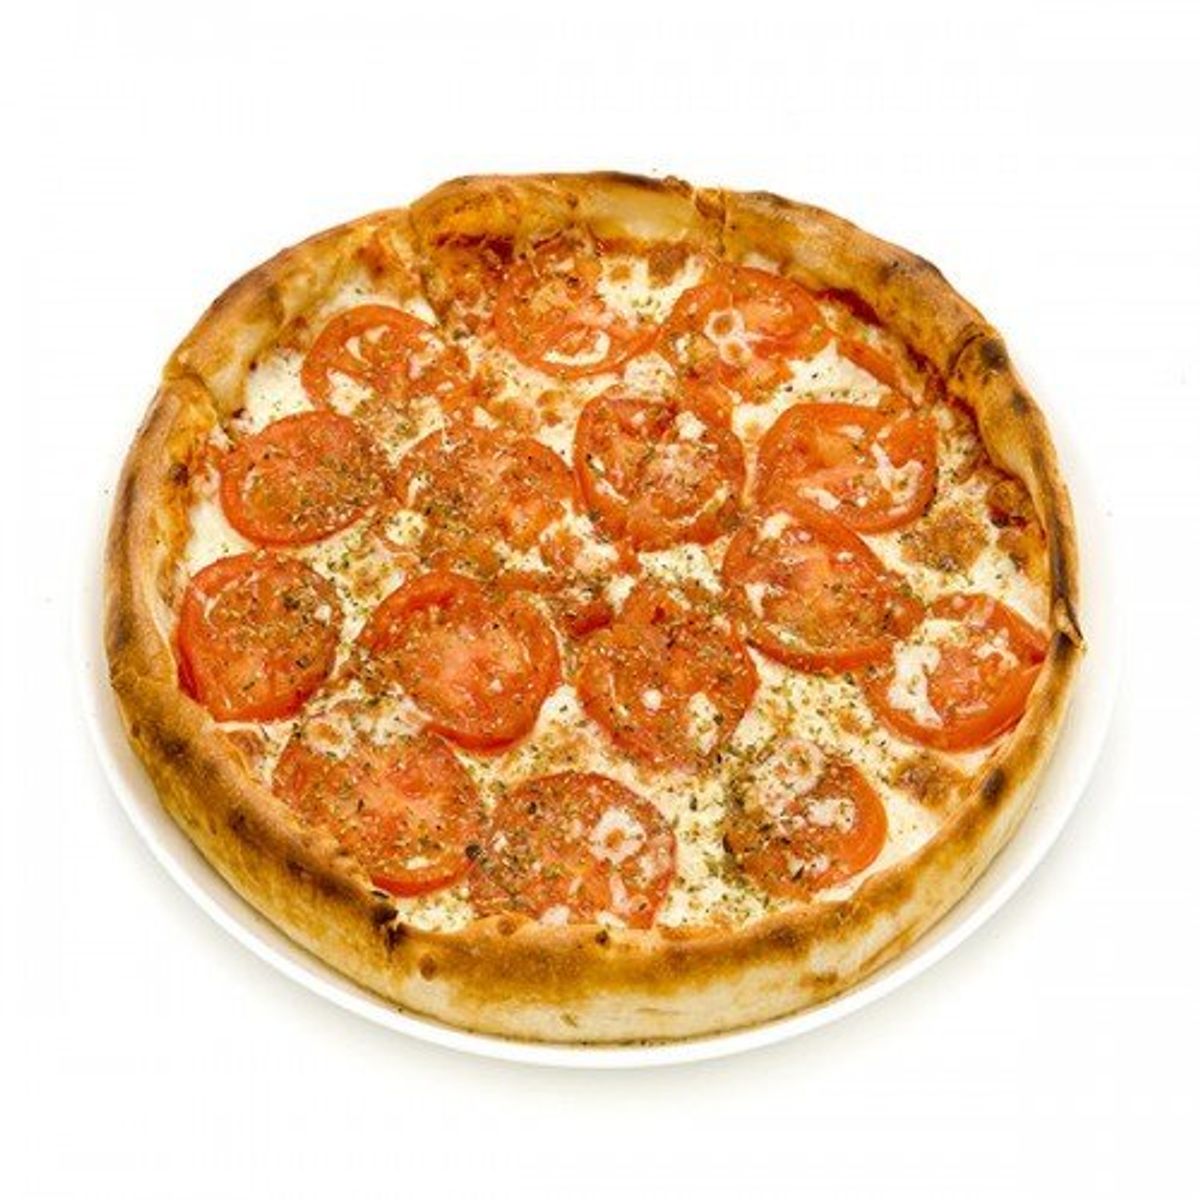 Pizza Pomodorini 